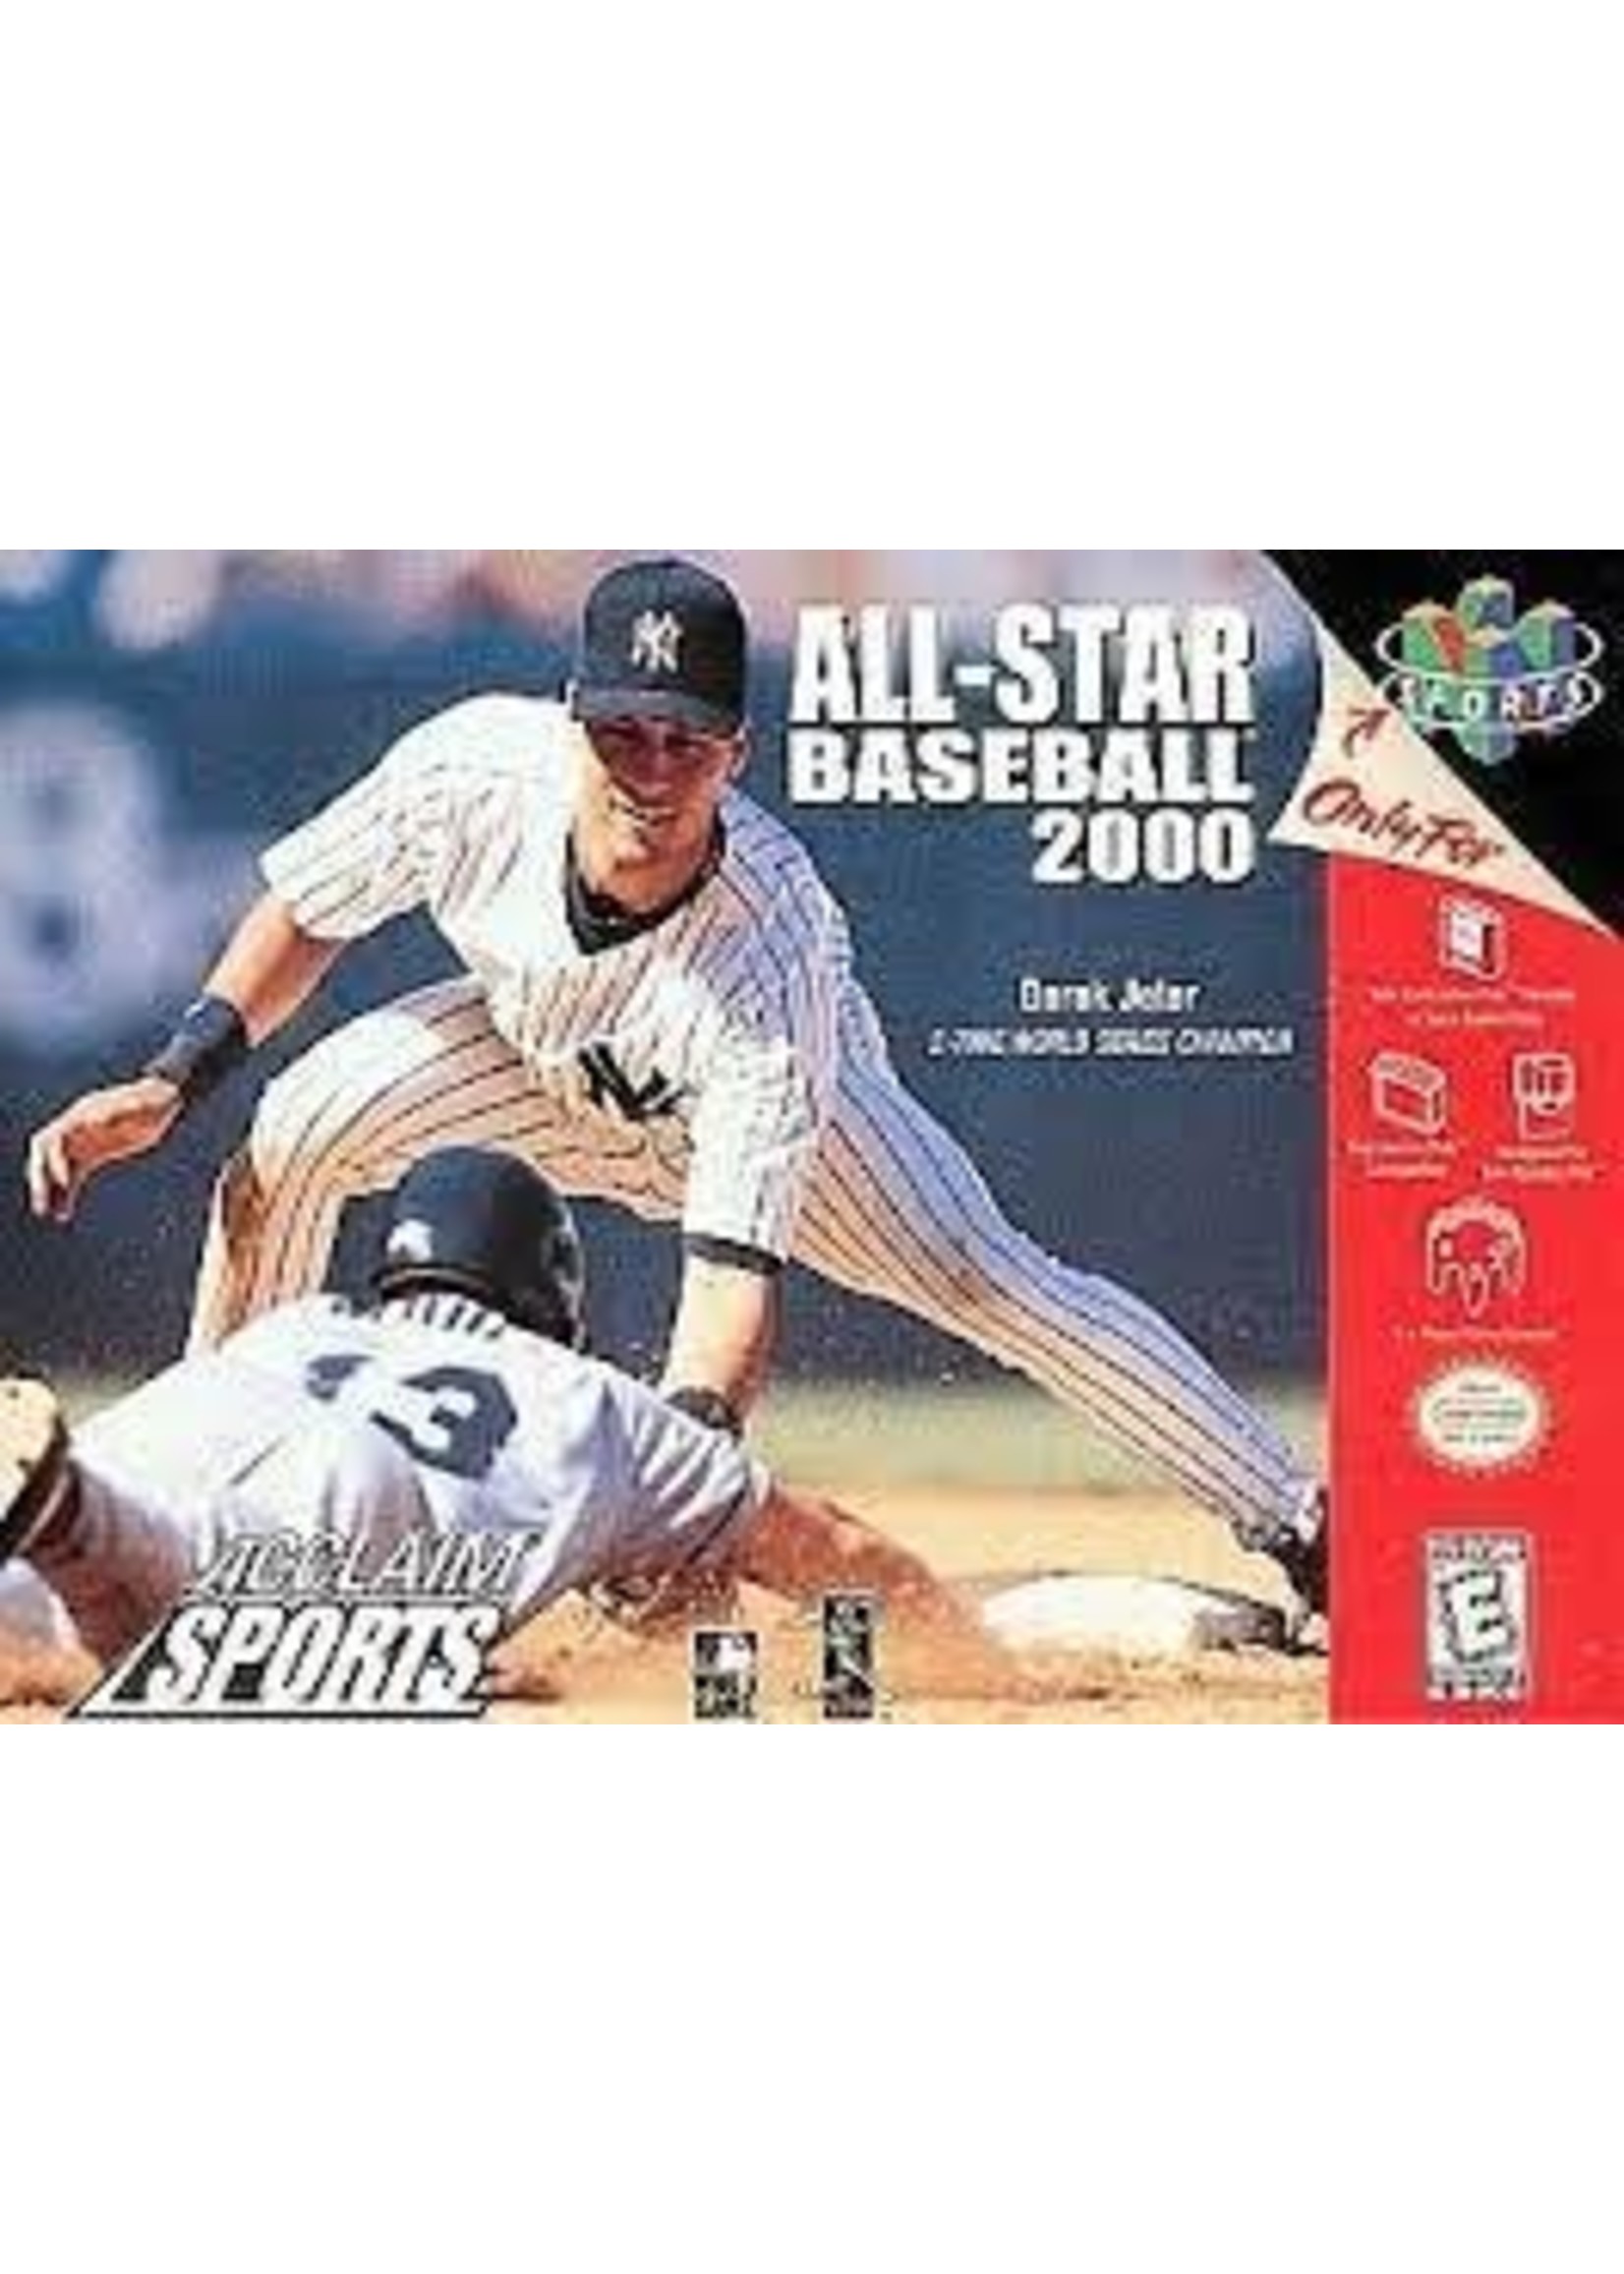 Nintendo 64 (N64) All-Star Baseball 2000